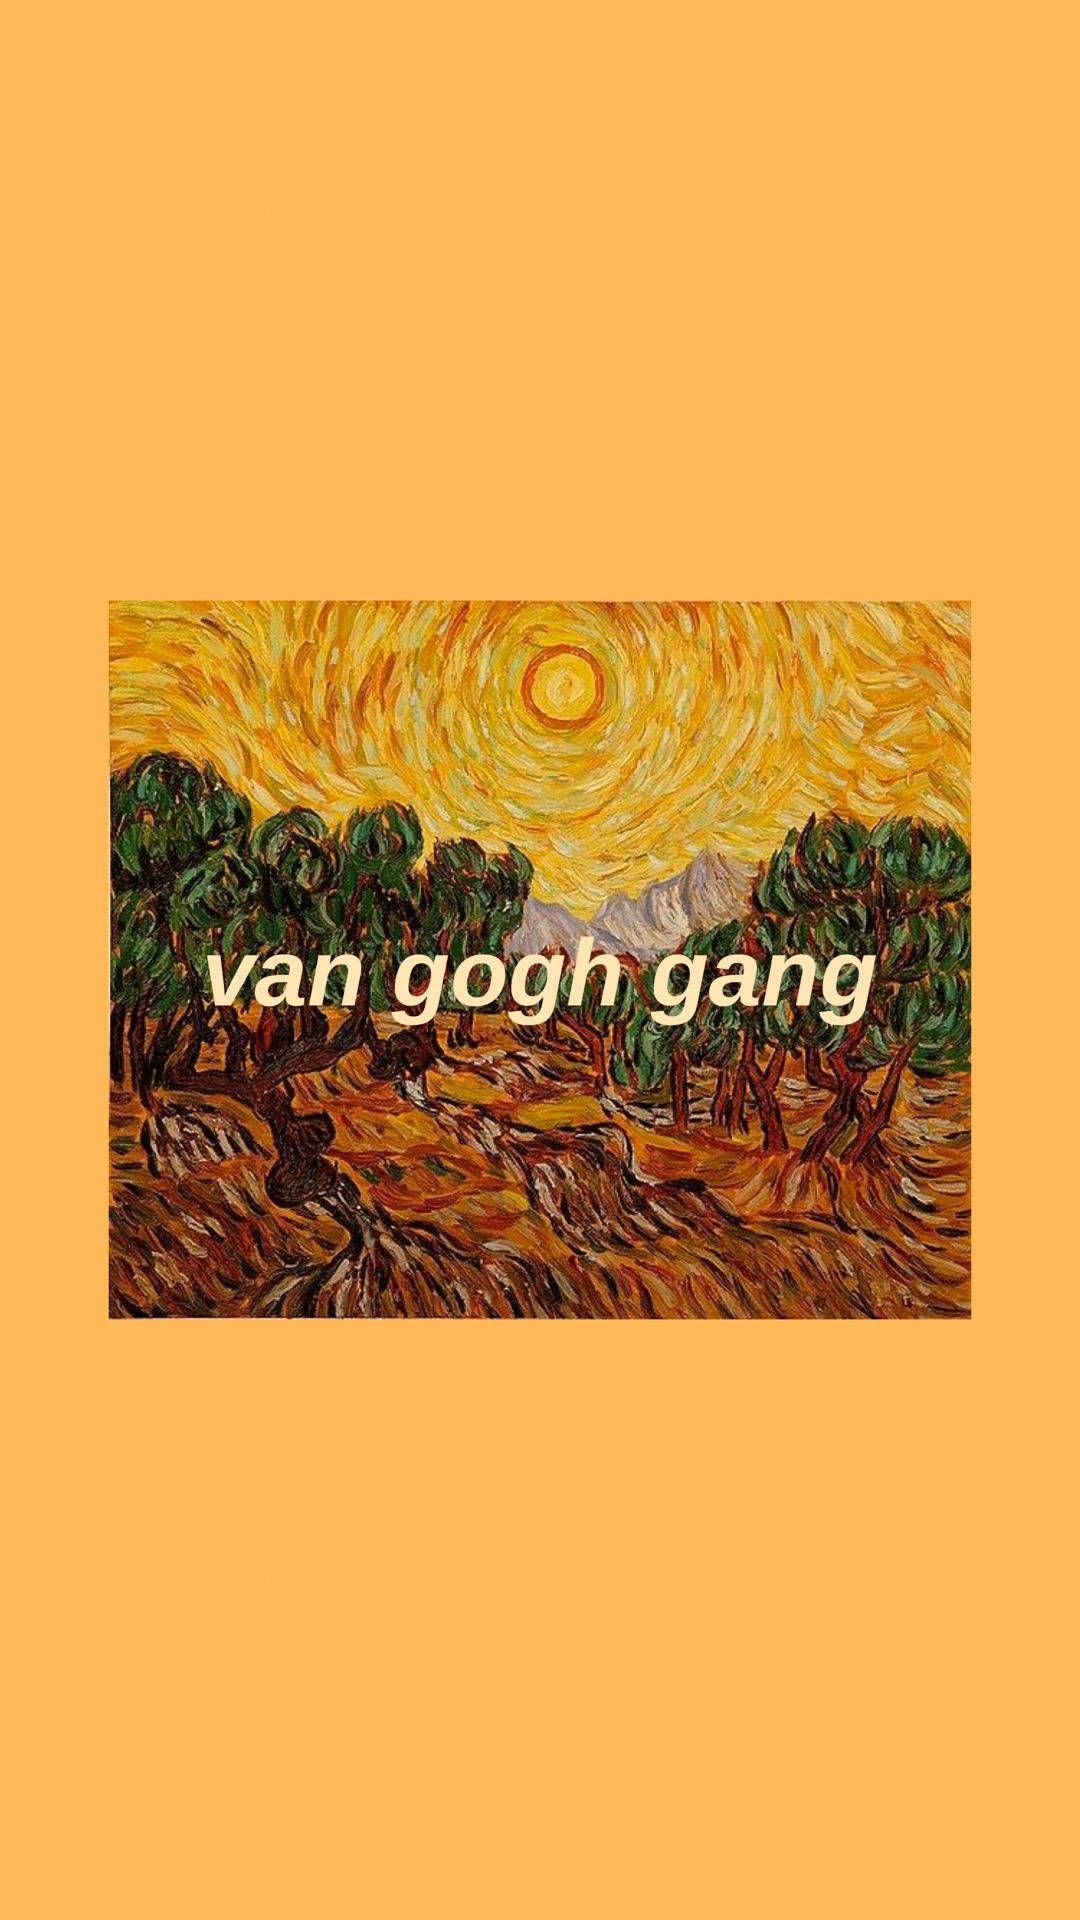 Vincent Van Gogh Hintergrundbild 1080x1920. Free Vincent Van Gogh Wallpaper Downloads, Vincent Van Gogh Wallpaper for FREE